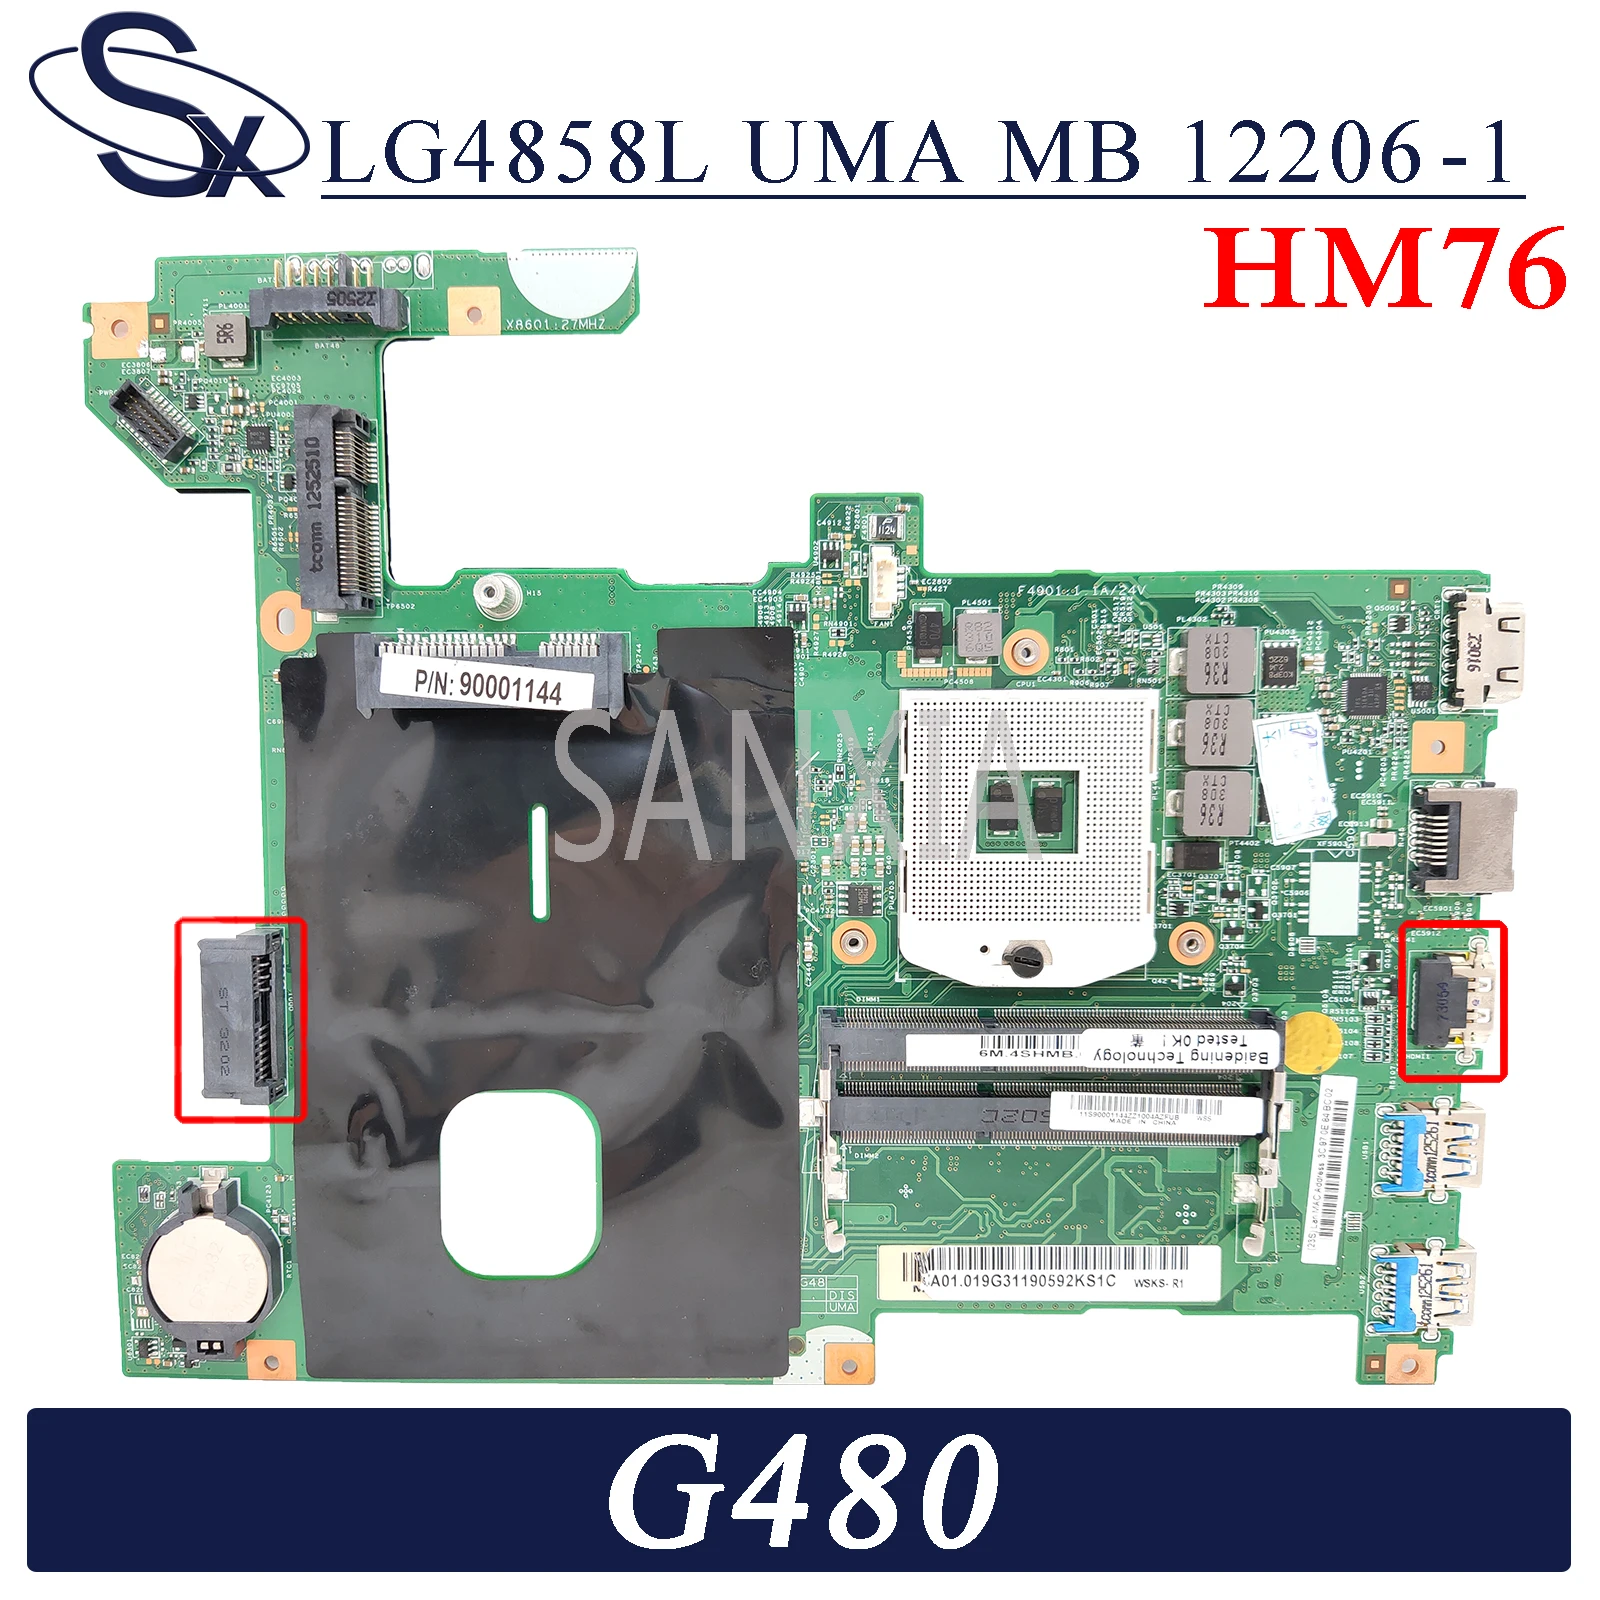 KEFU LG4858L UMA MB 12206-1 Laptop motherboard for Lenovo G480 (14 inch) original mainboard HM76 GM with HDMI